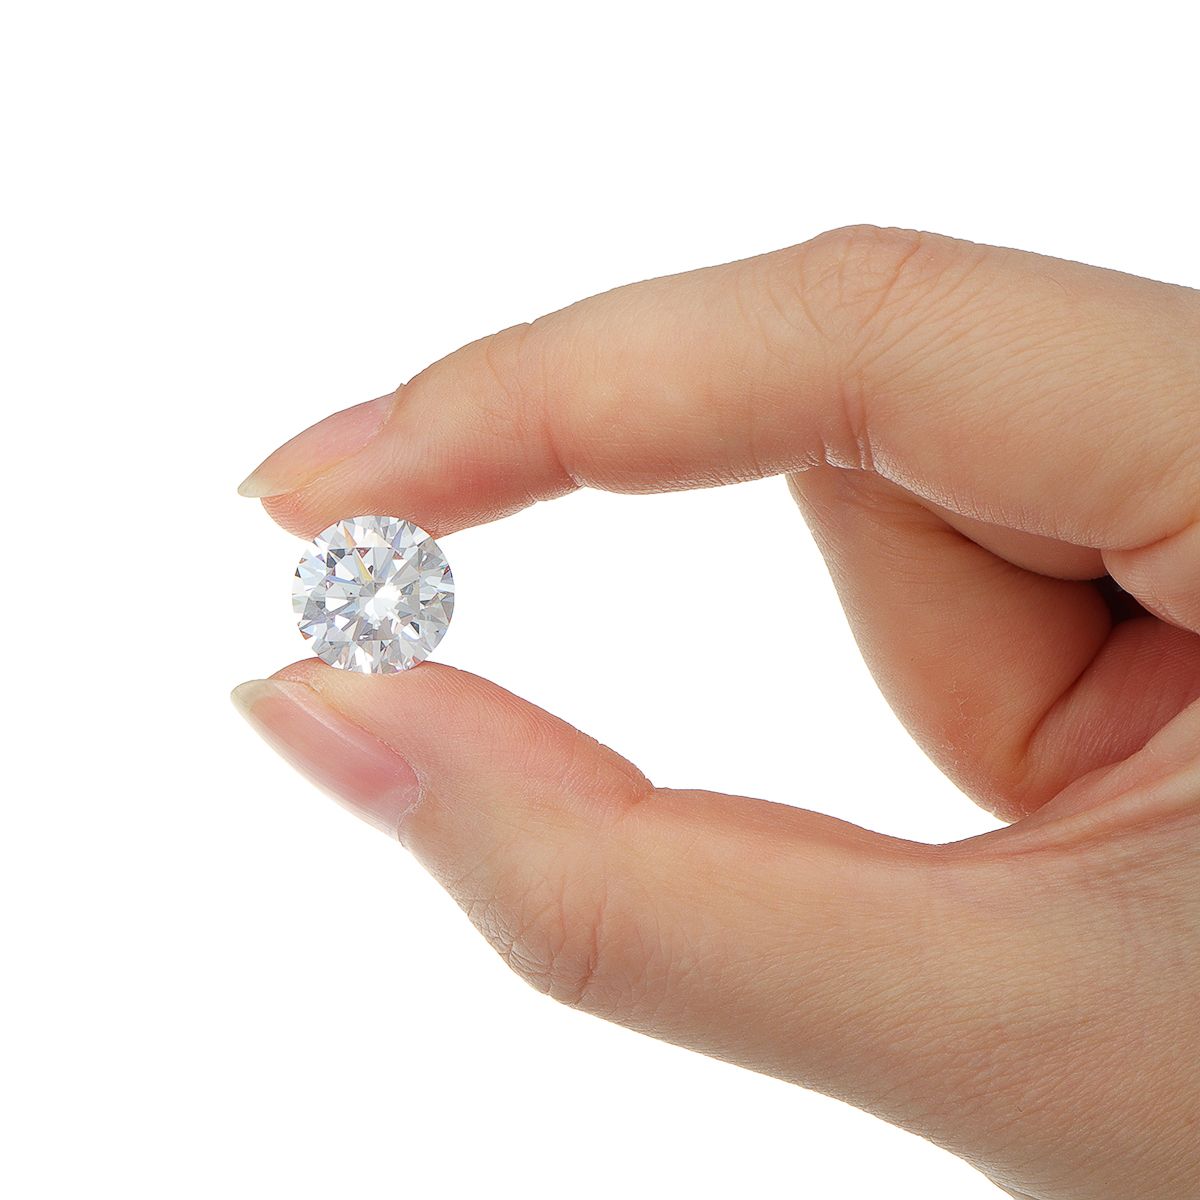 510121520mm-Round-D-White-VVS-Simulated-Hearts-amp-Arrow-Lab-Created-Diamond-Gemstones-Decorations-1634211